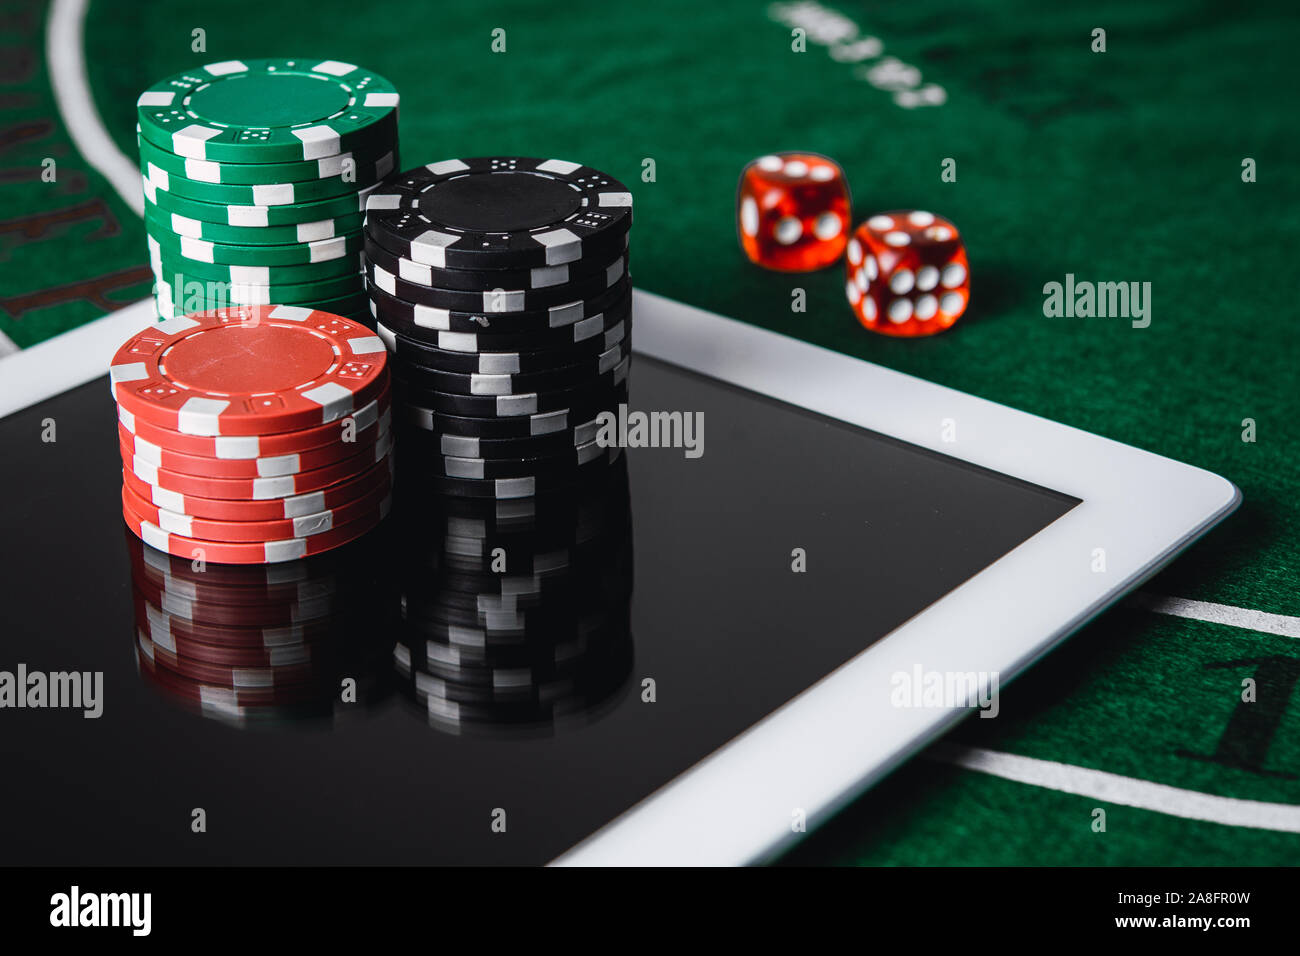 Play poker online. Online casino - online gambling concept Stock Photo